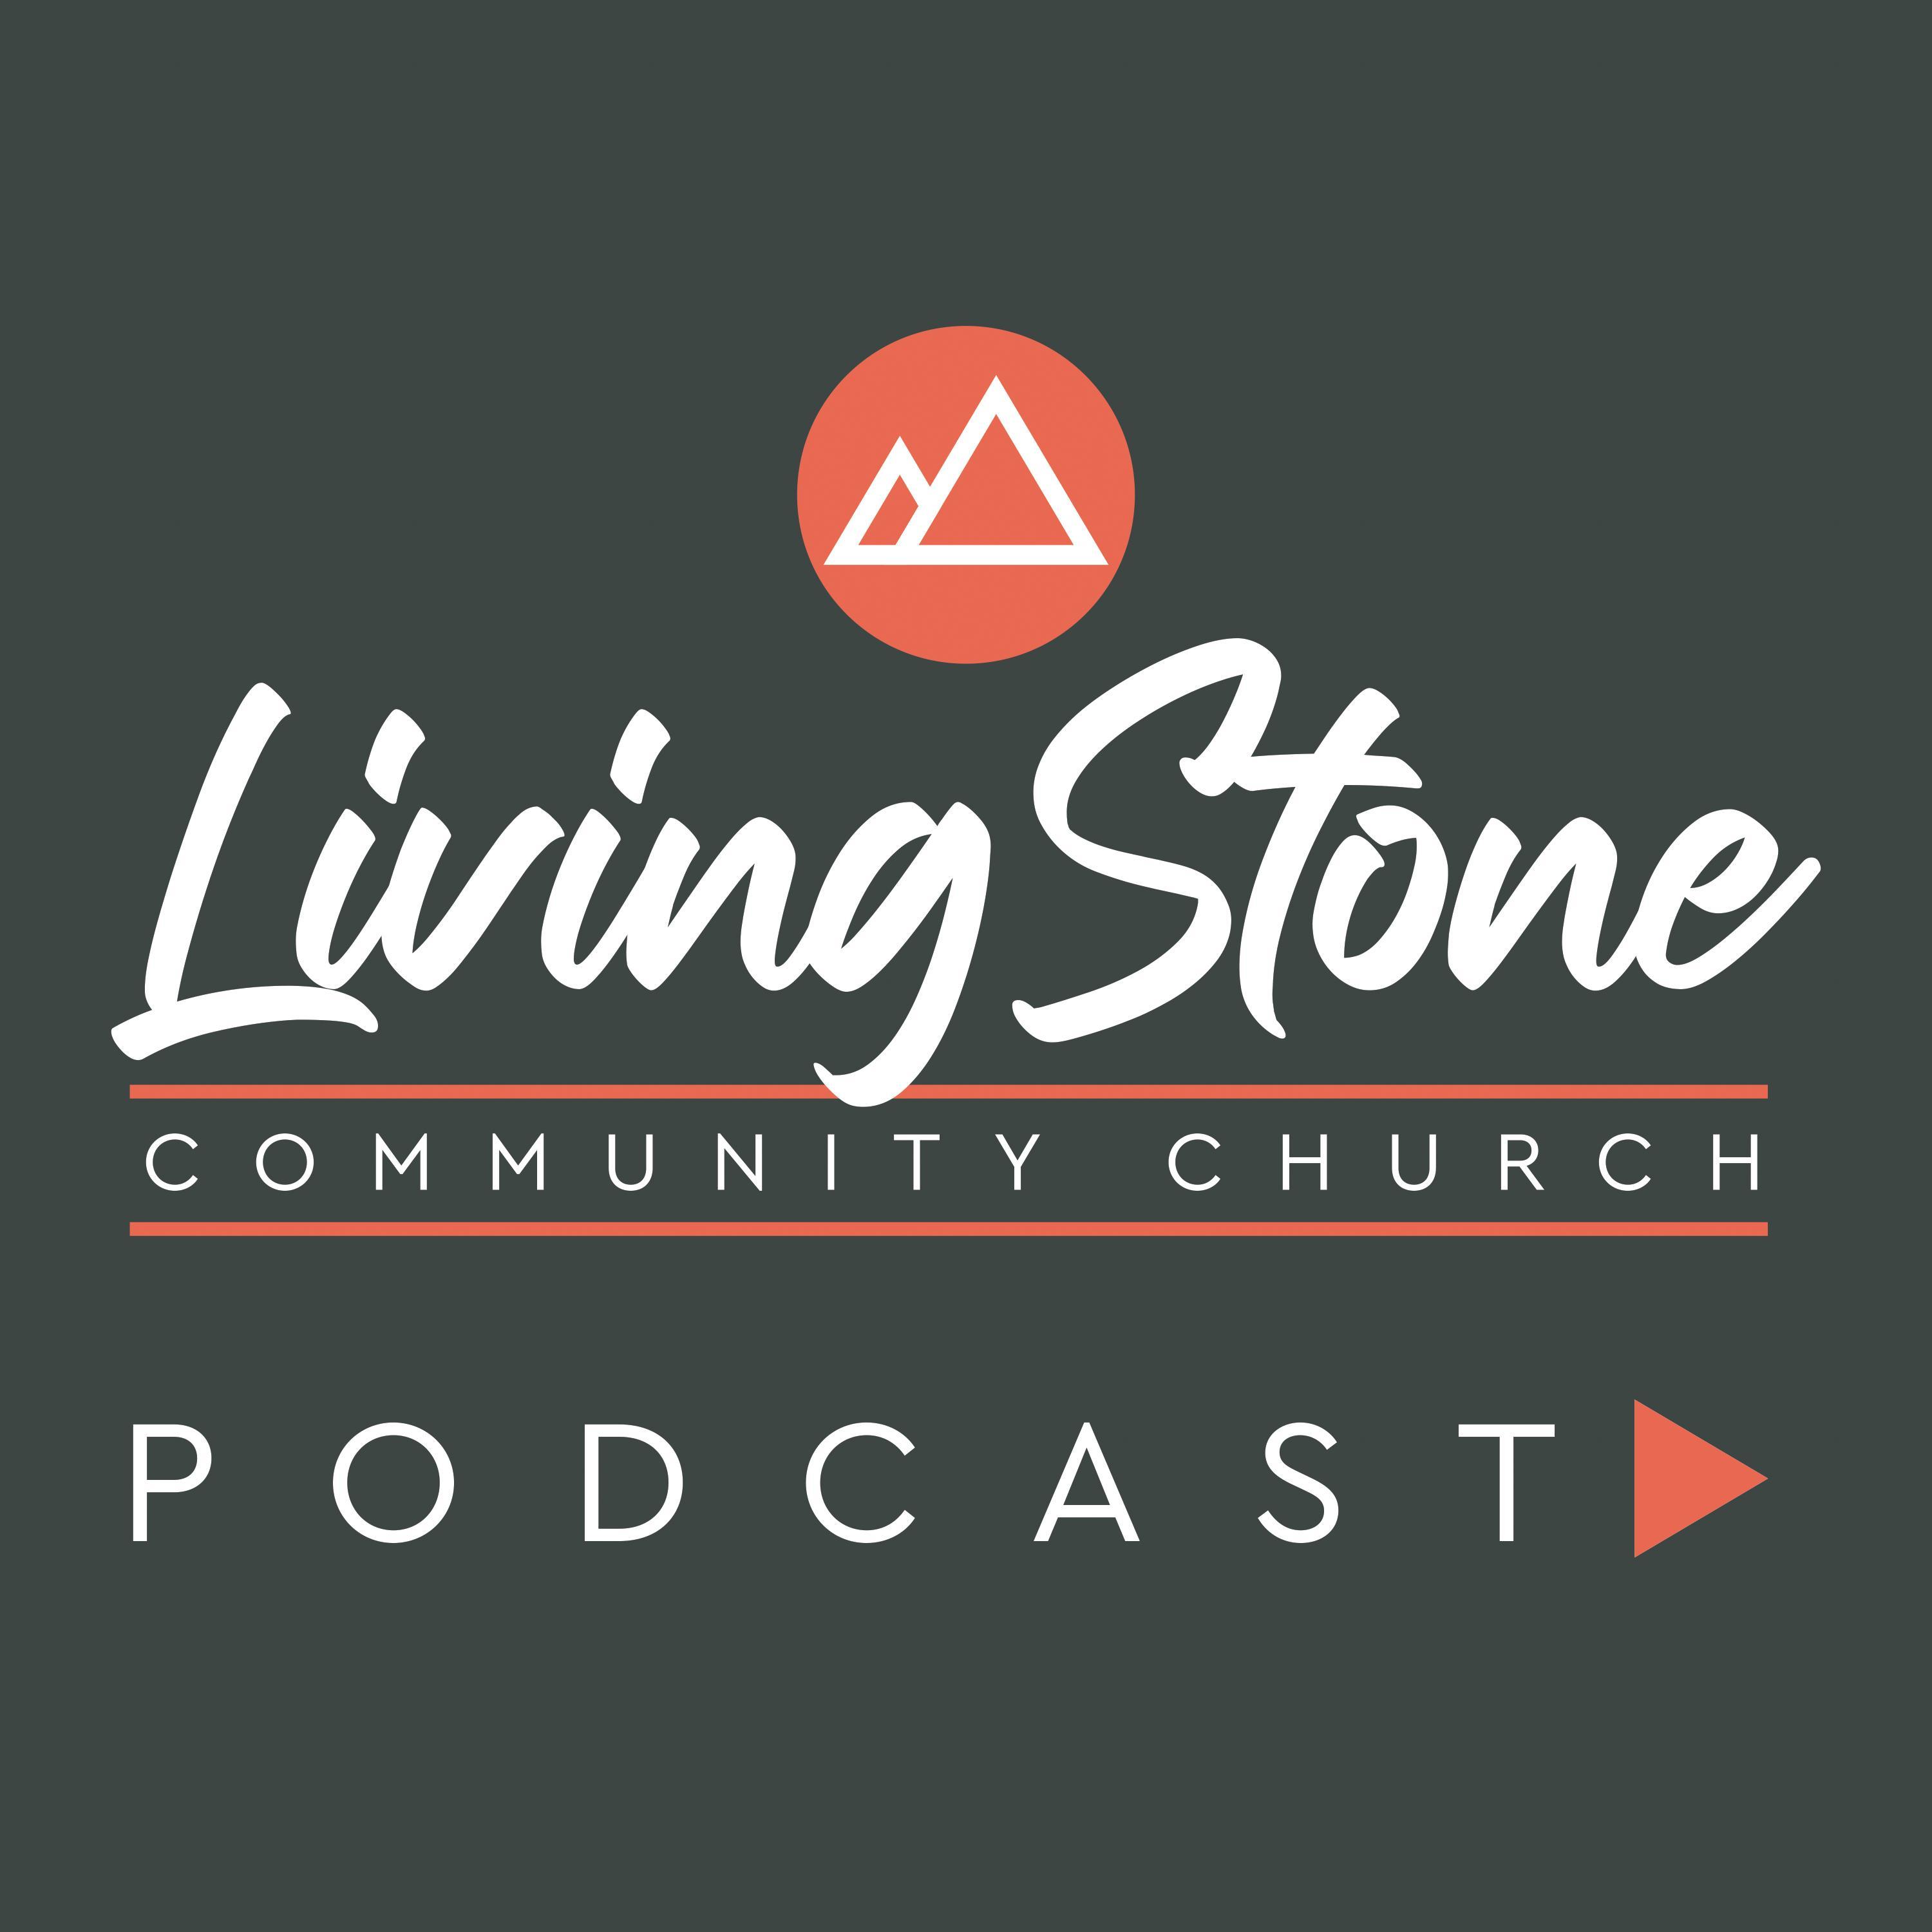 Living Stone Sermons